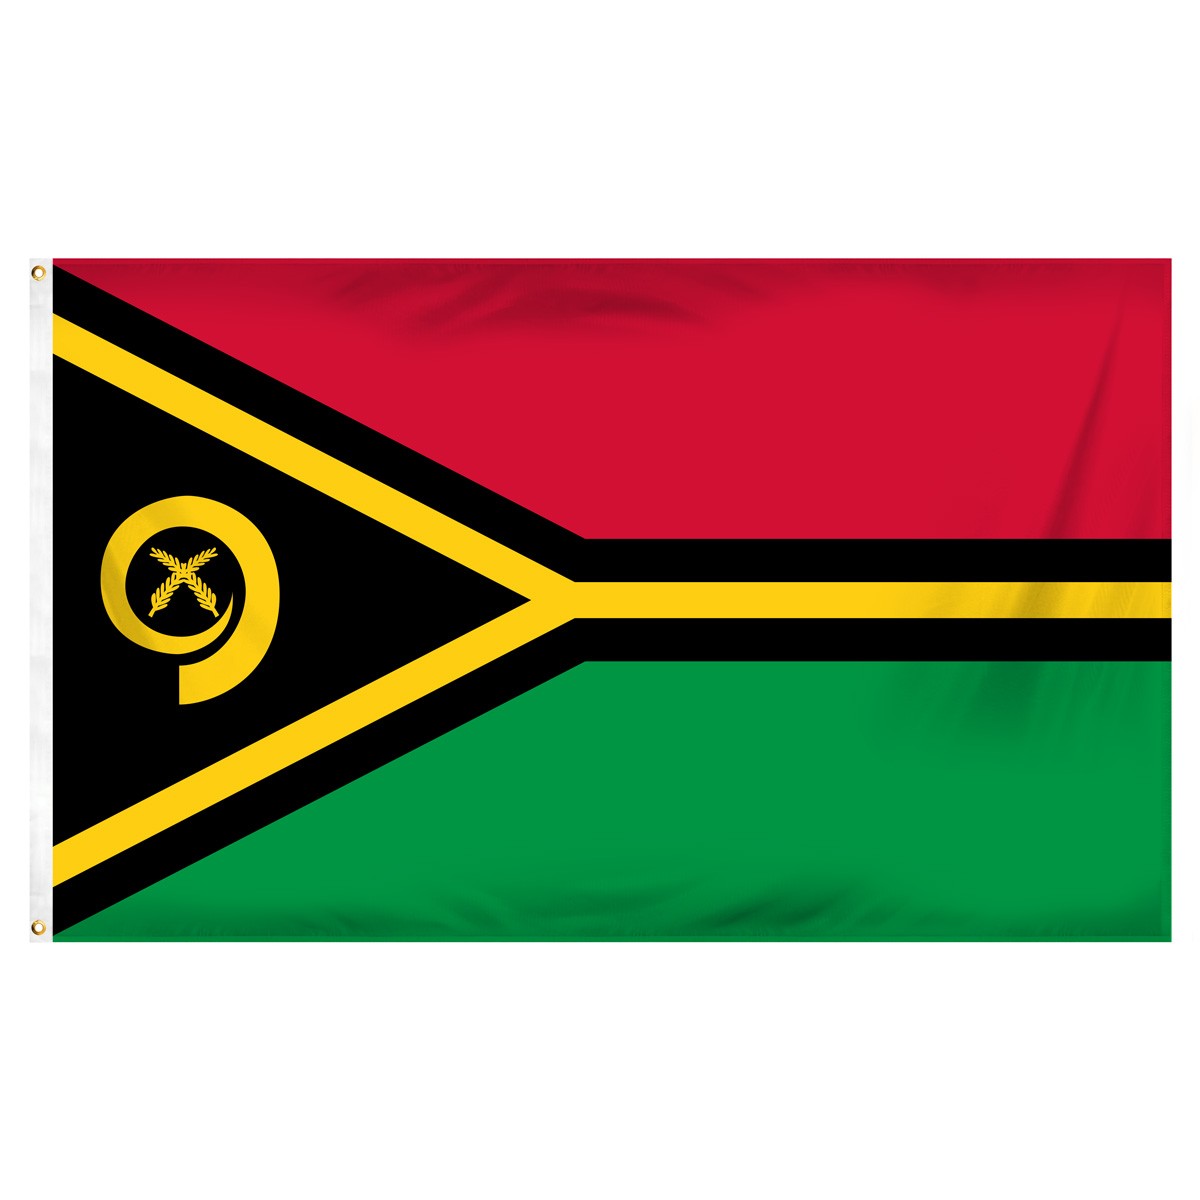 Vanuatu Triangle Flags and Pennants